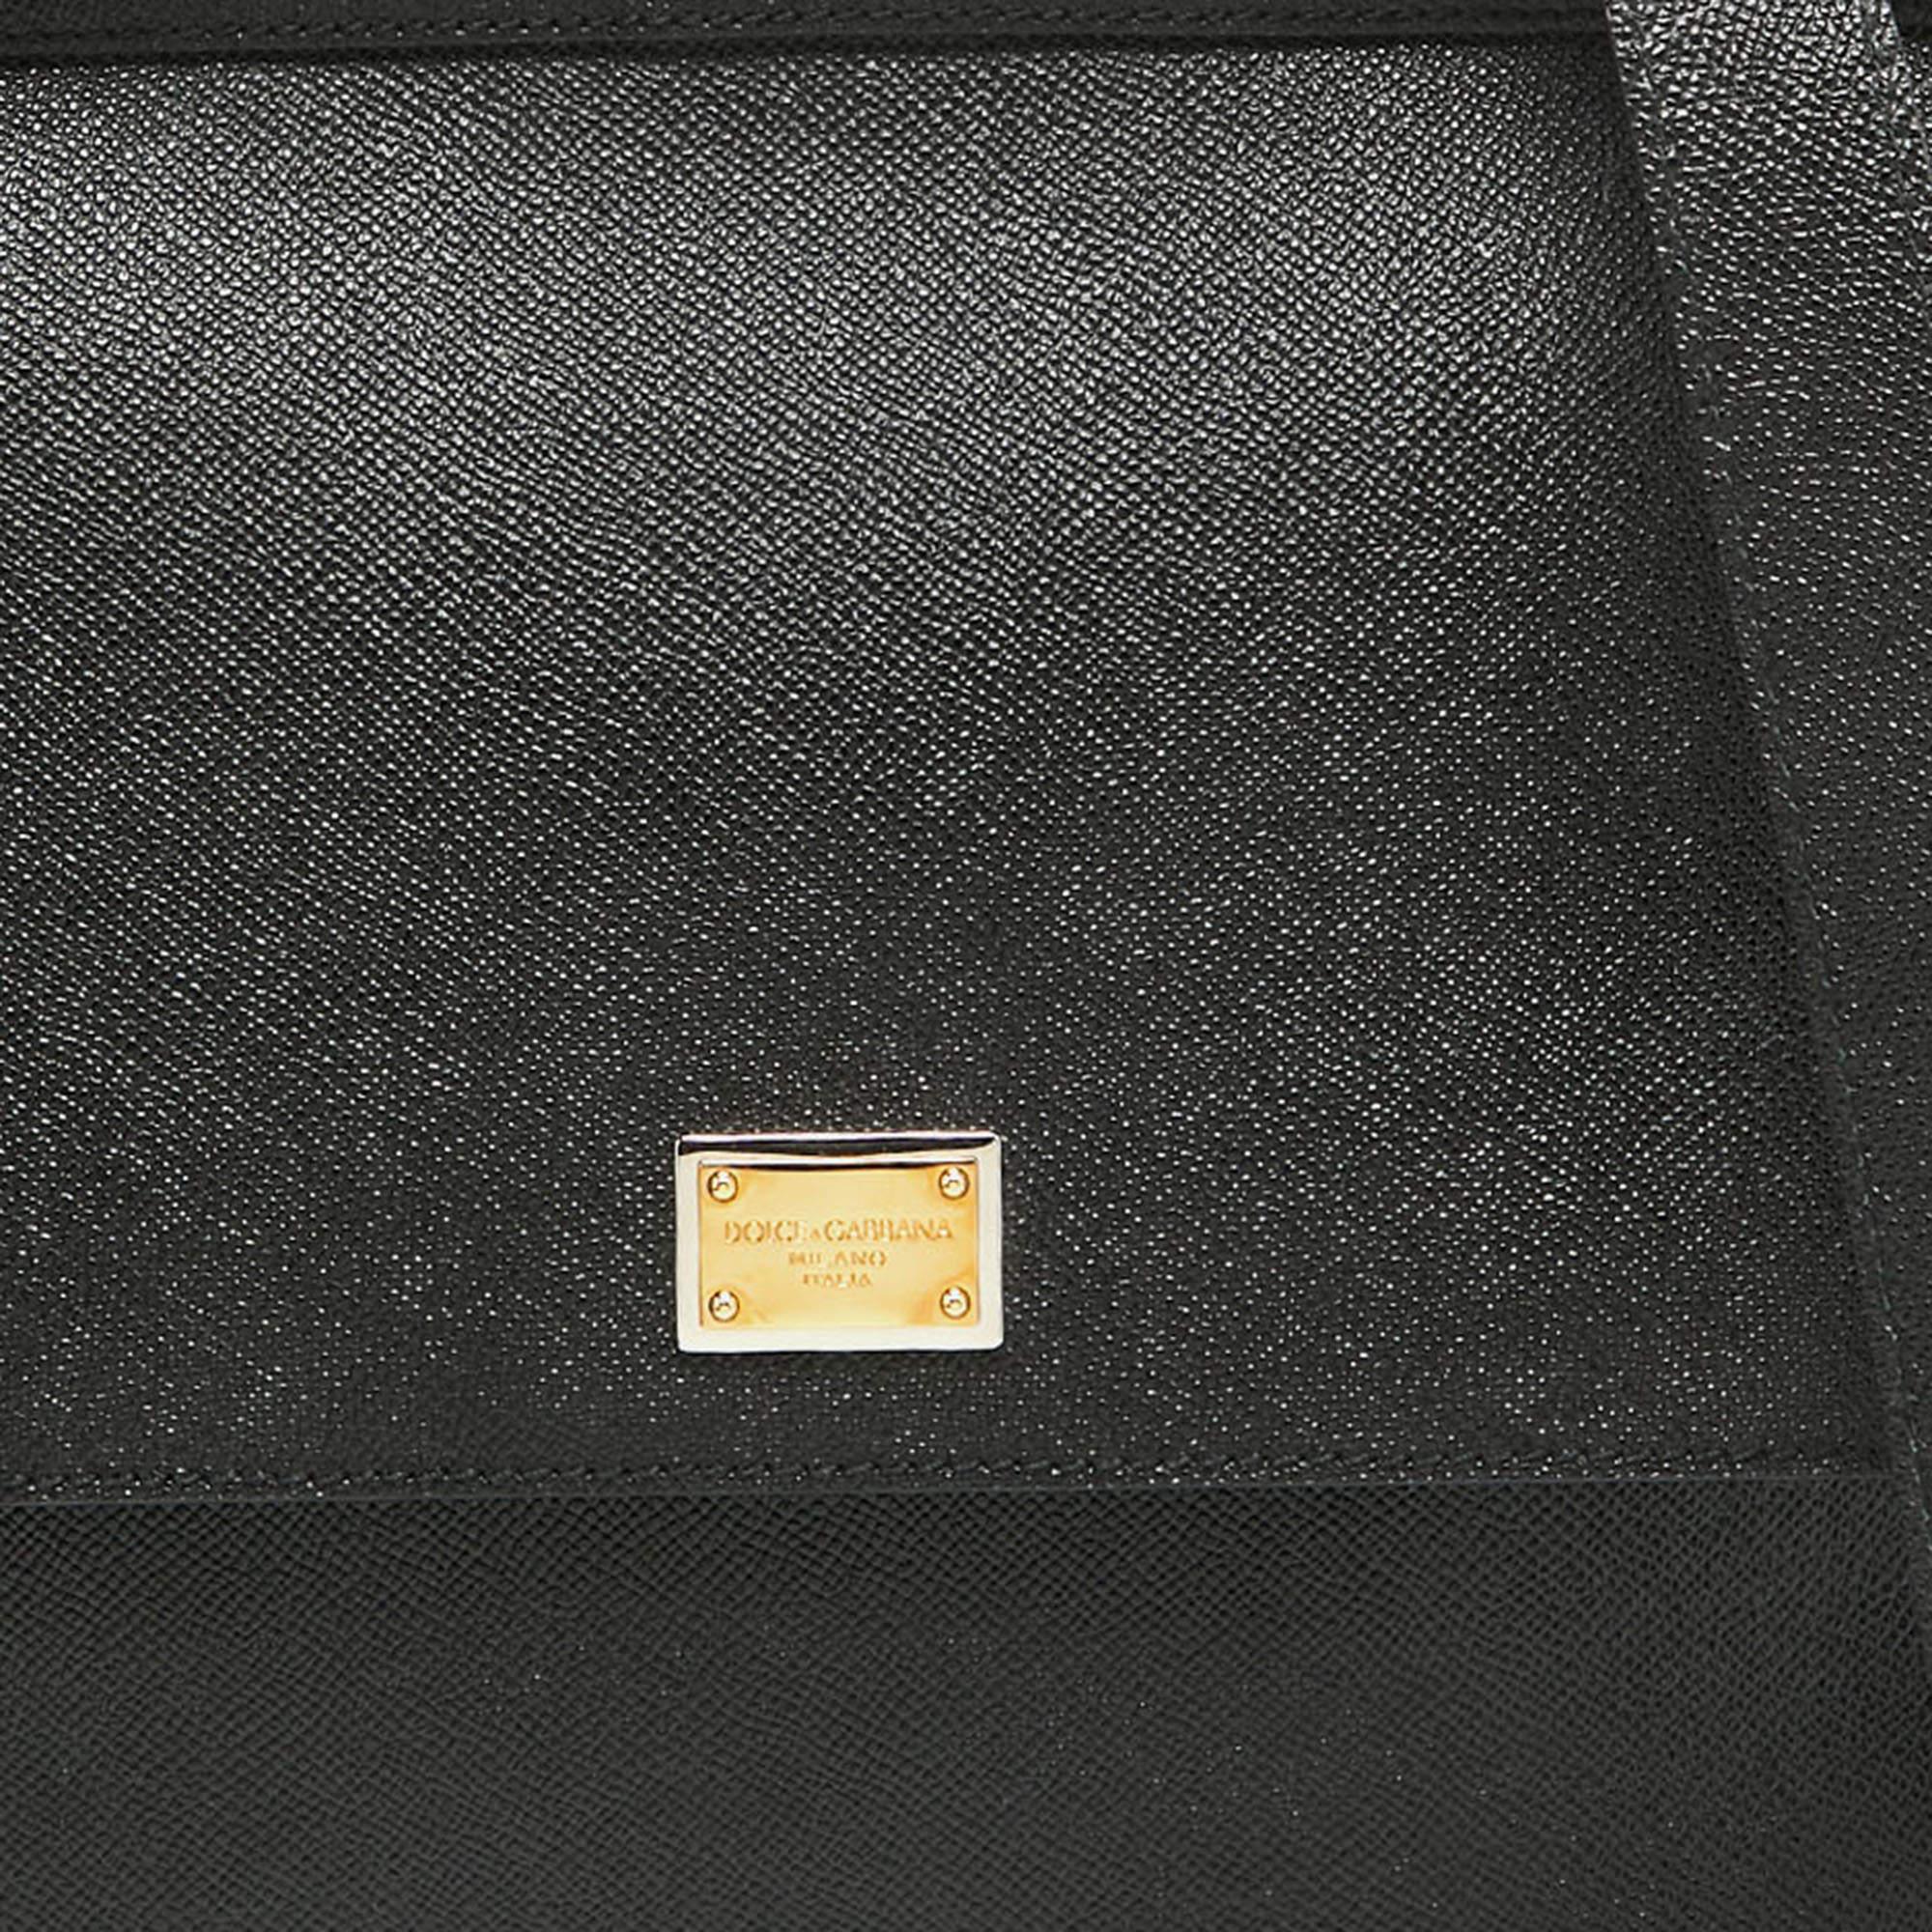 Dolce & Gabbana Black Leather Large Miss Sicily Top Handle Bag 6